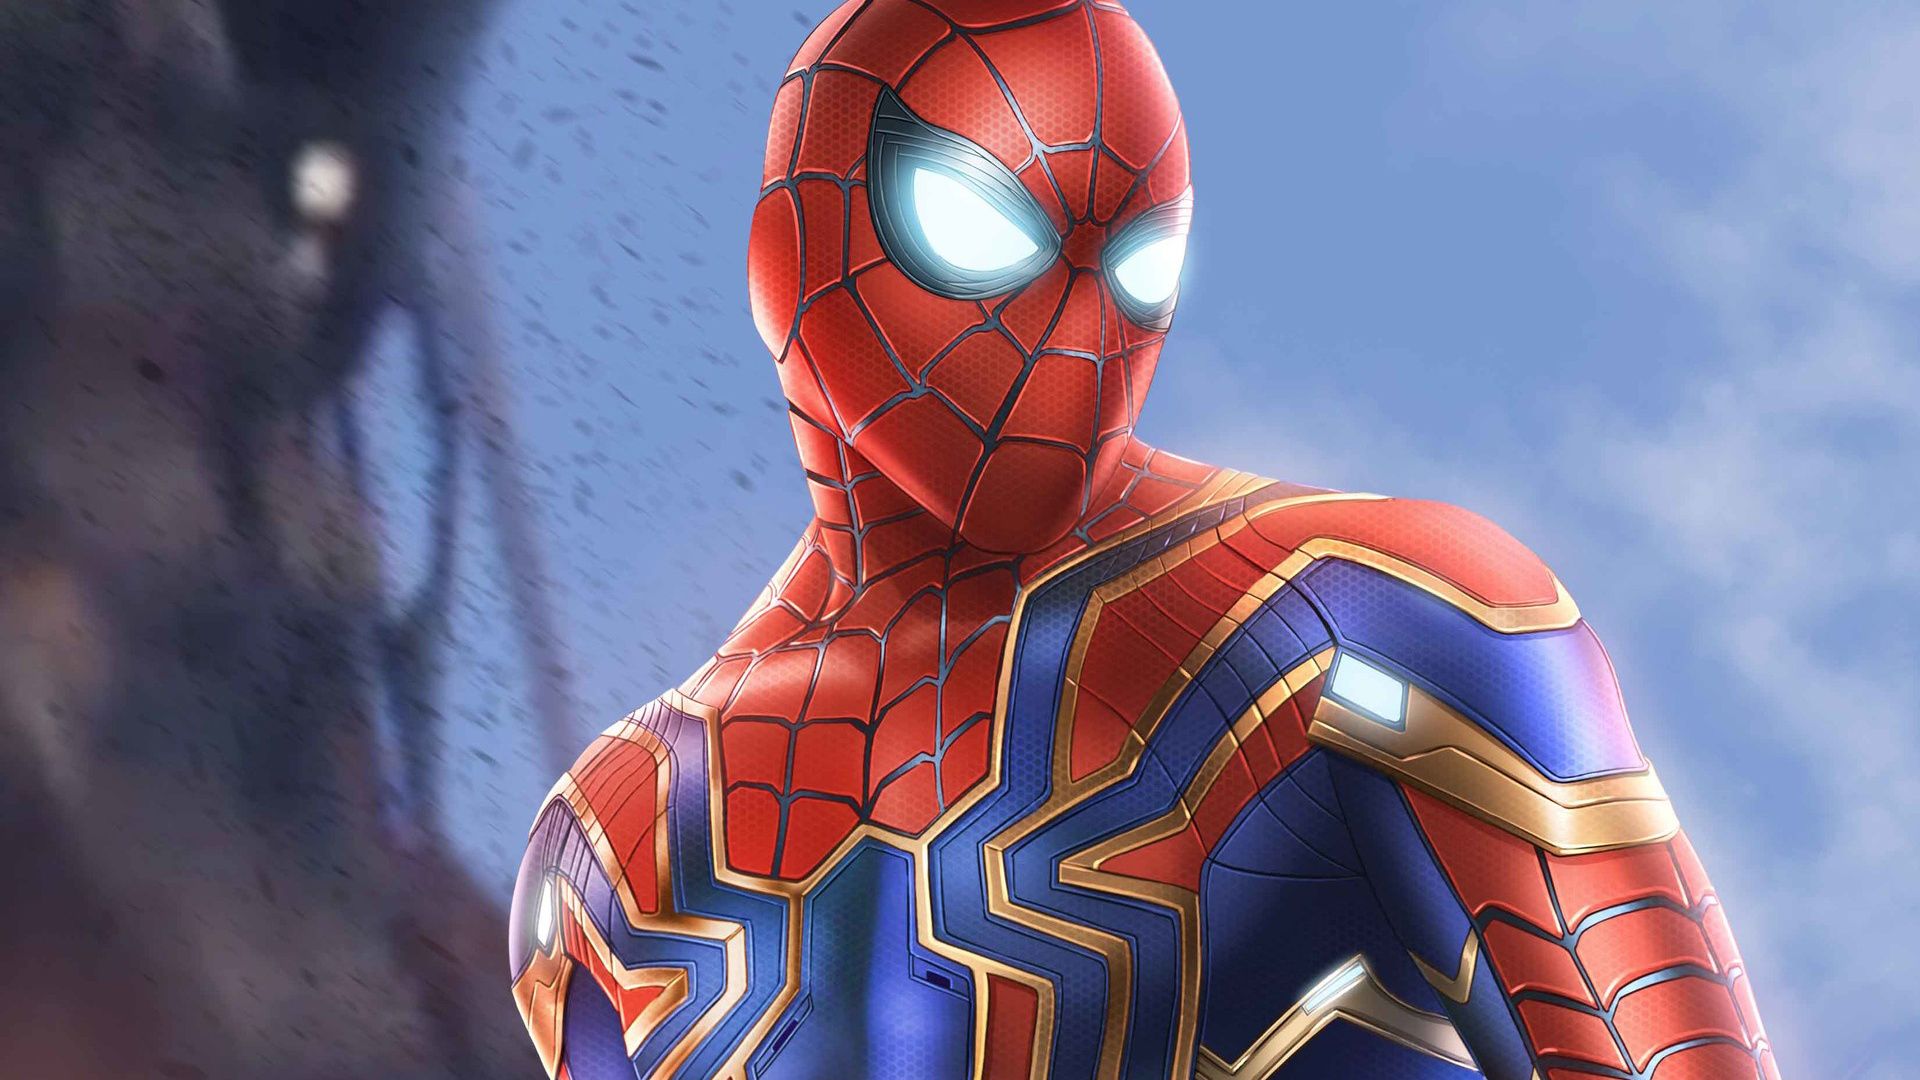 Download Spider Man, Iron Suit, Art Wallpaper, 1920x Full HD, HDTV, FHD, 1080p